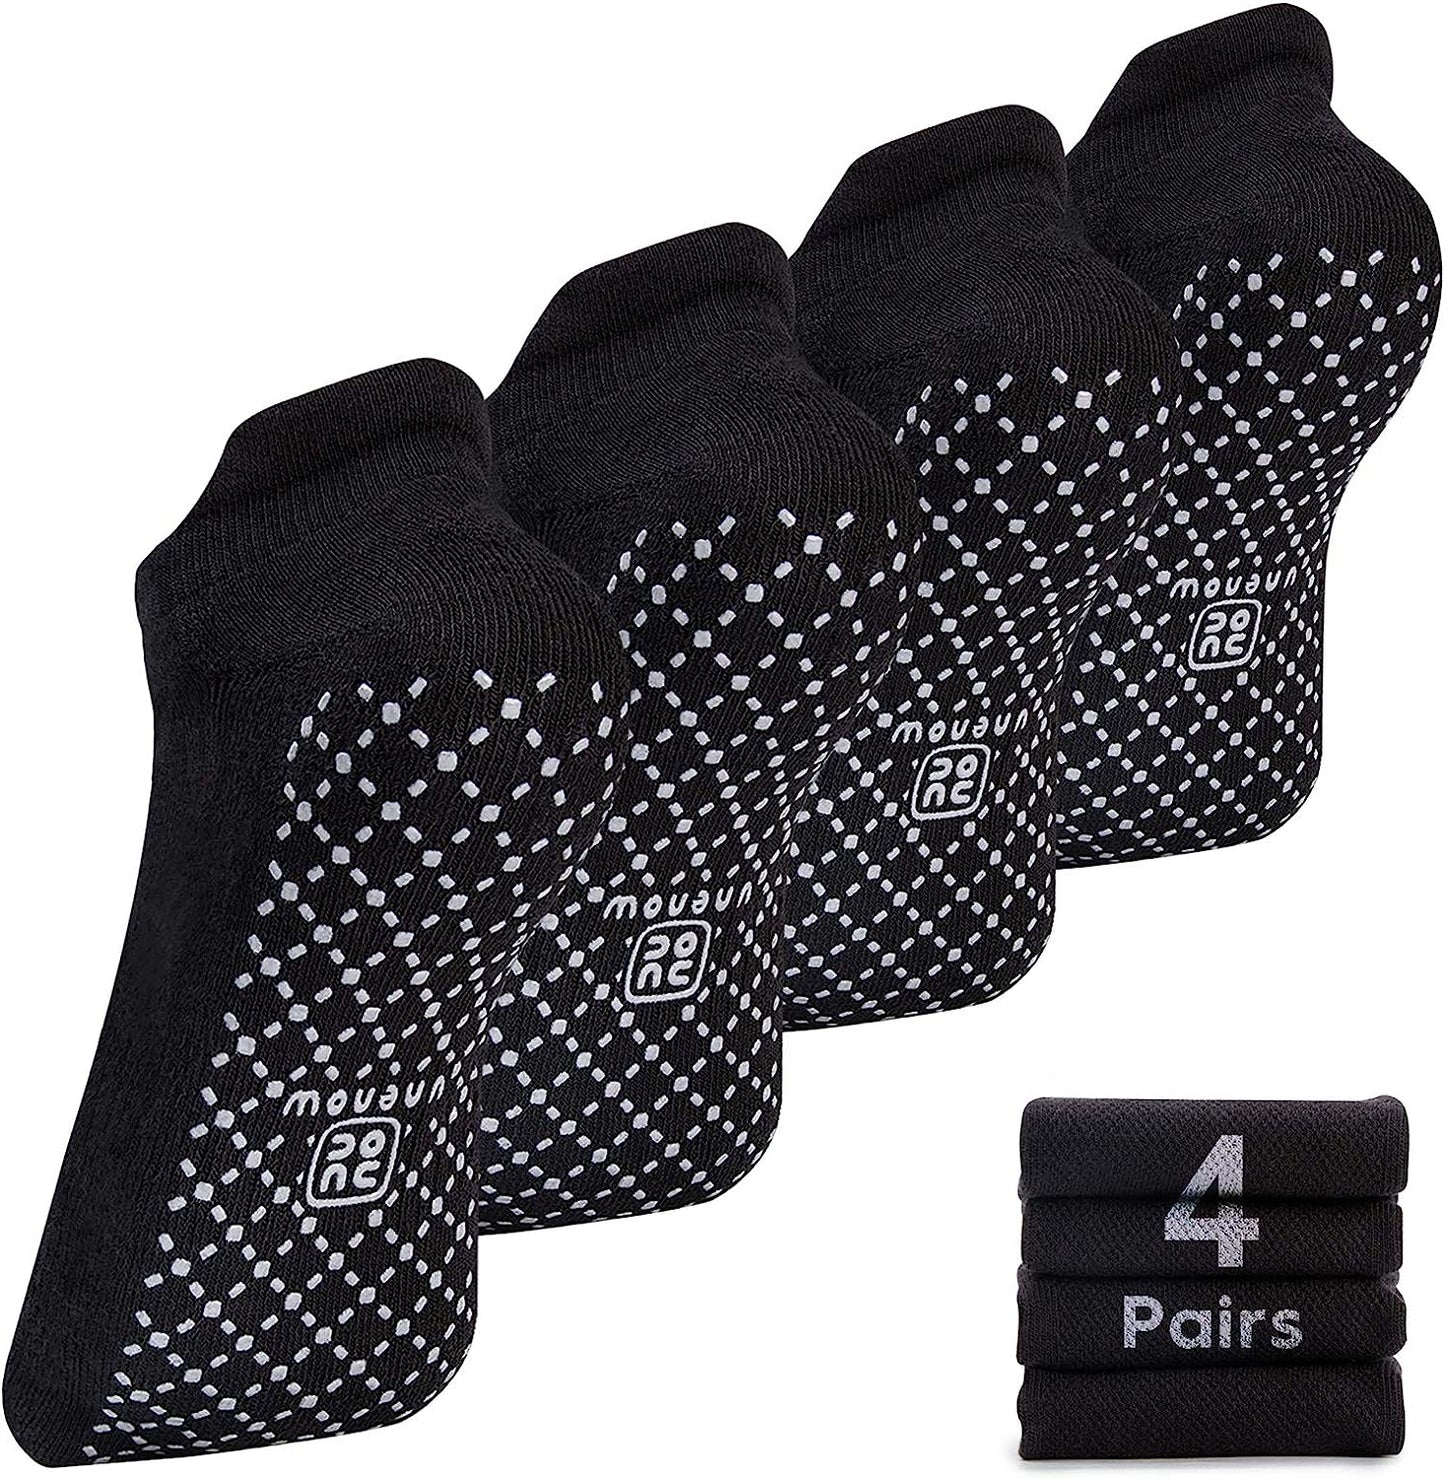 Unisex Non Slip Grip Socks with Cushion for Yoga Pilates Barre Home & Hospital